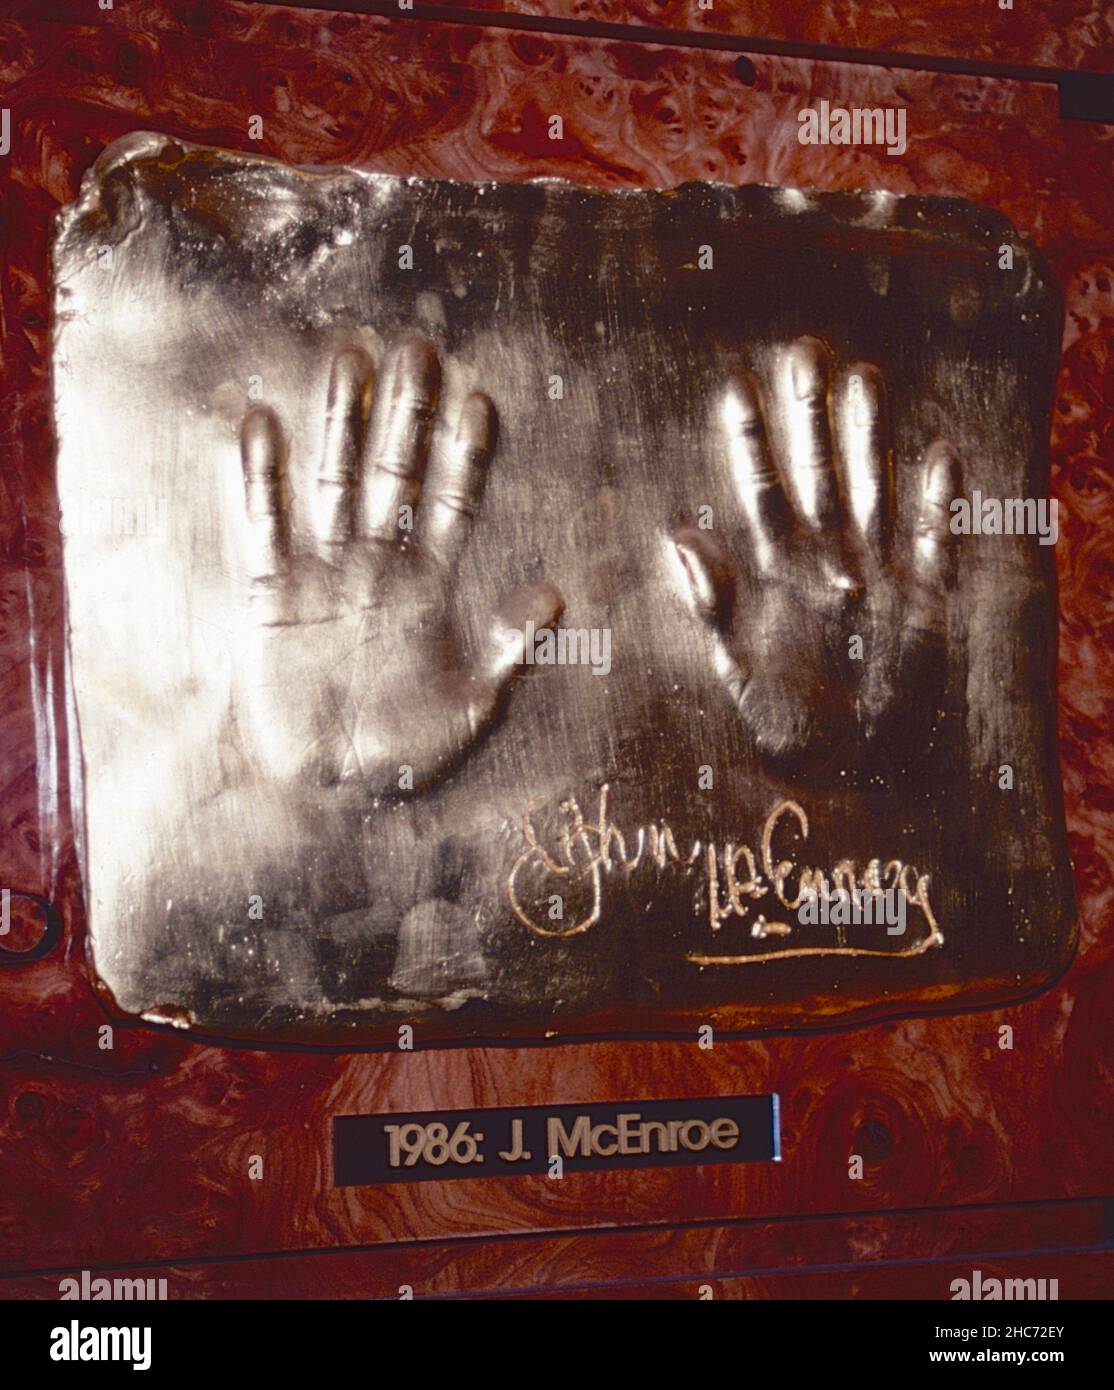 American tennis player John McEnroe' hands stamped in metal, 1980s Stock Photo